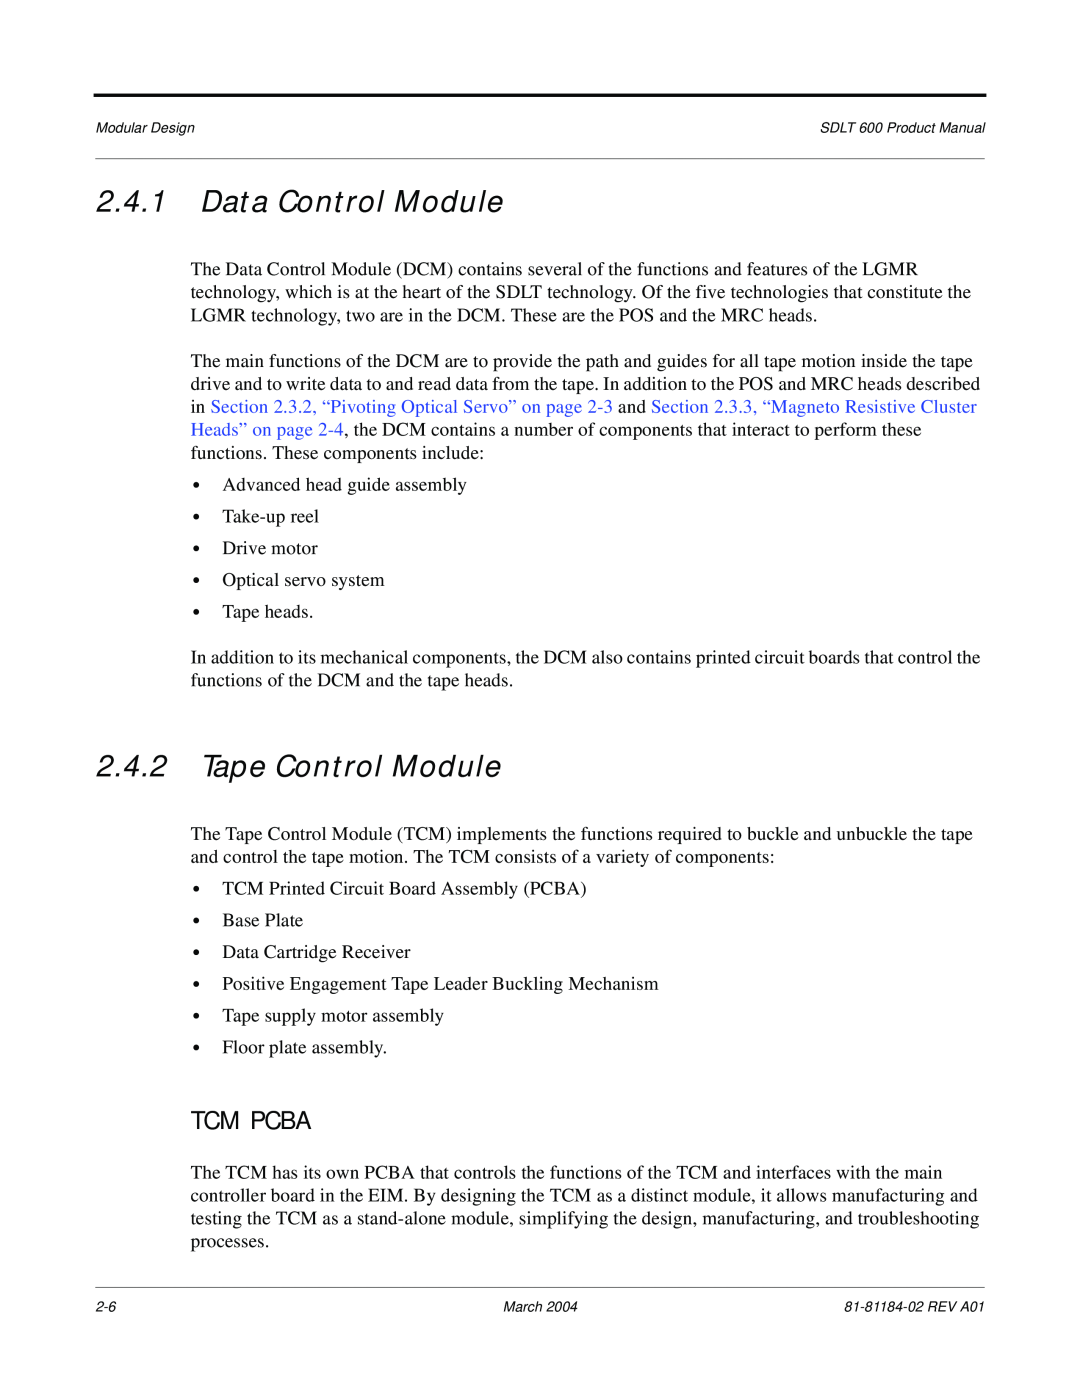 Tandberg Data 600 manual Data Control Module, Tape Control Module, Tcm Pcba 